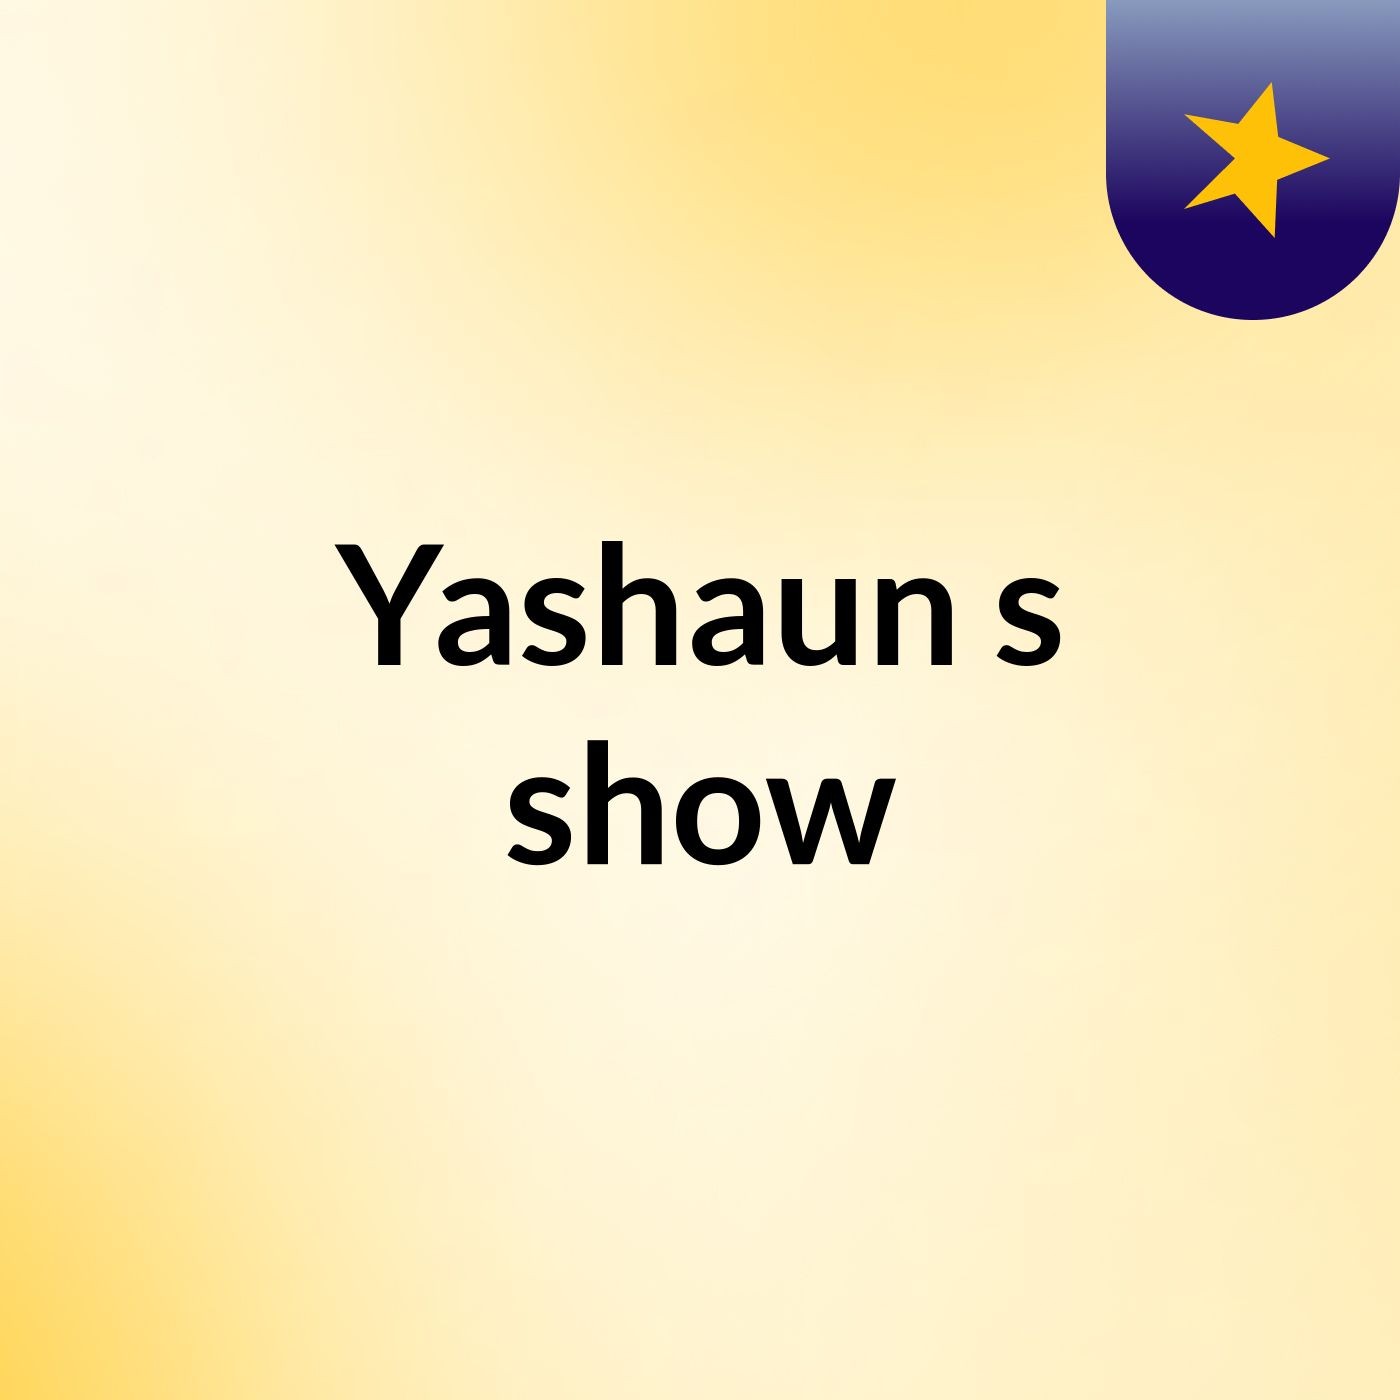 Yashaun's show